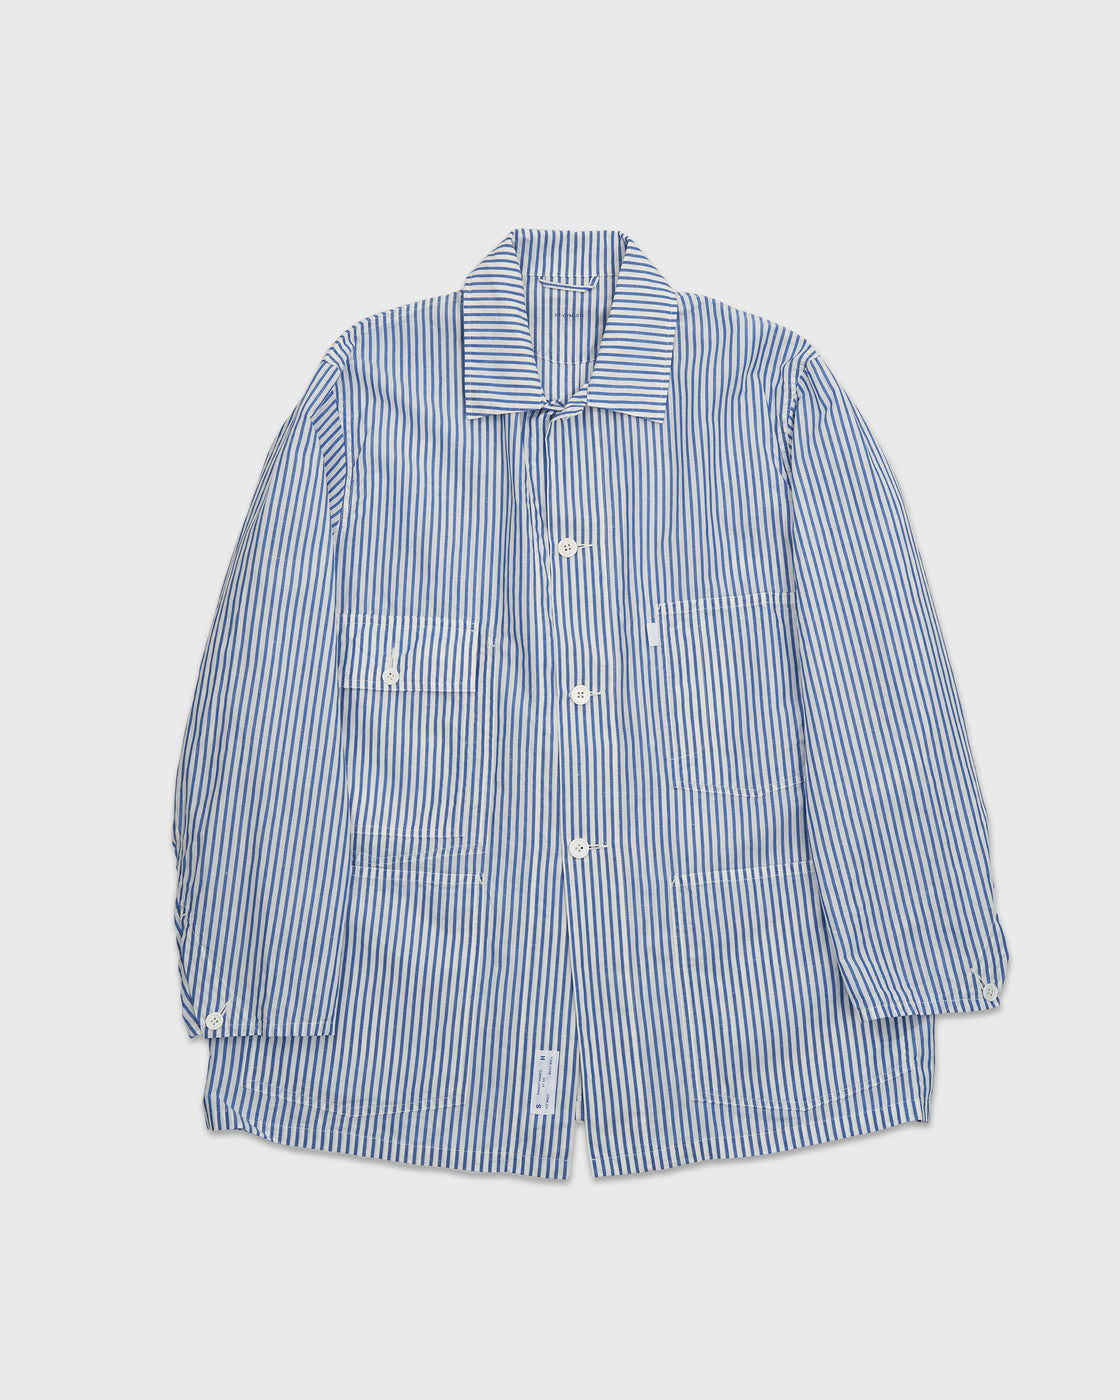 S H CVRL-032 Coverall Shirt(Cotton/Linen), Blue Stripe